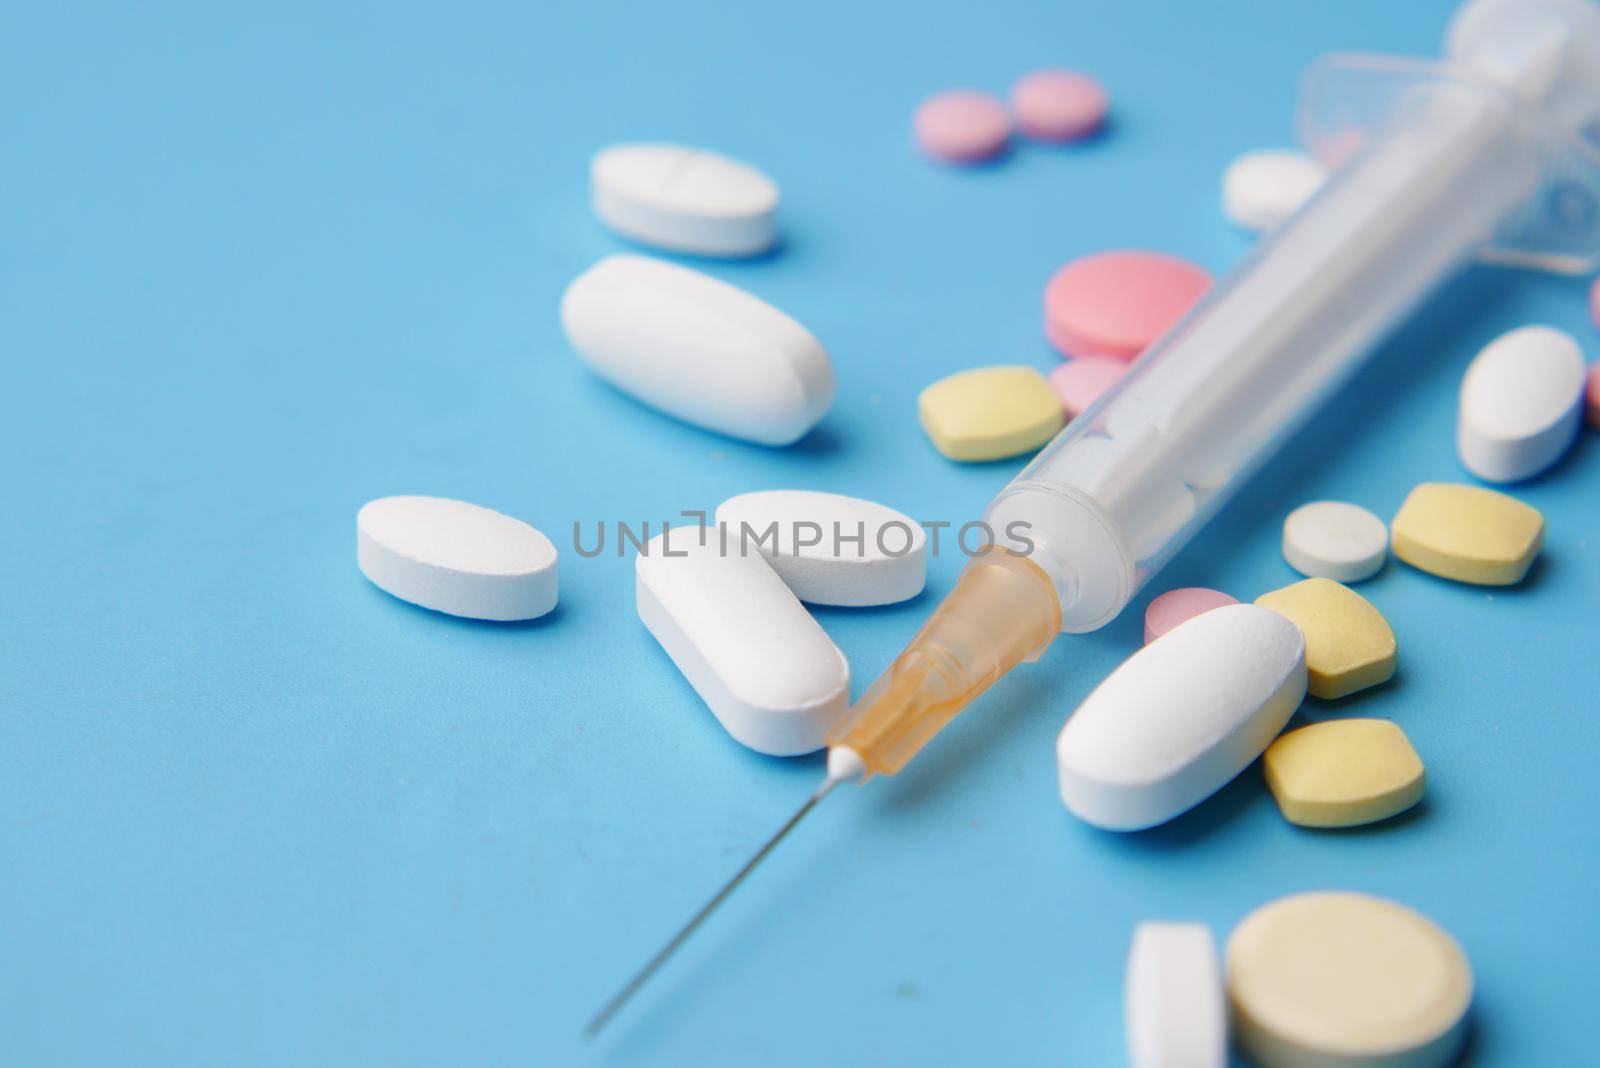 syringe and pills on blue background, close up .